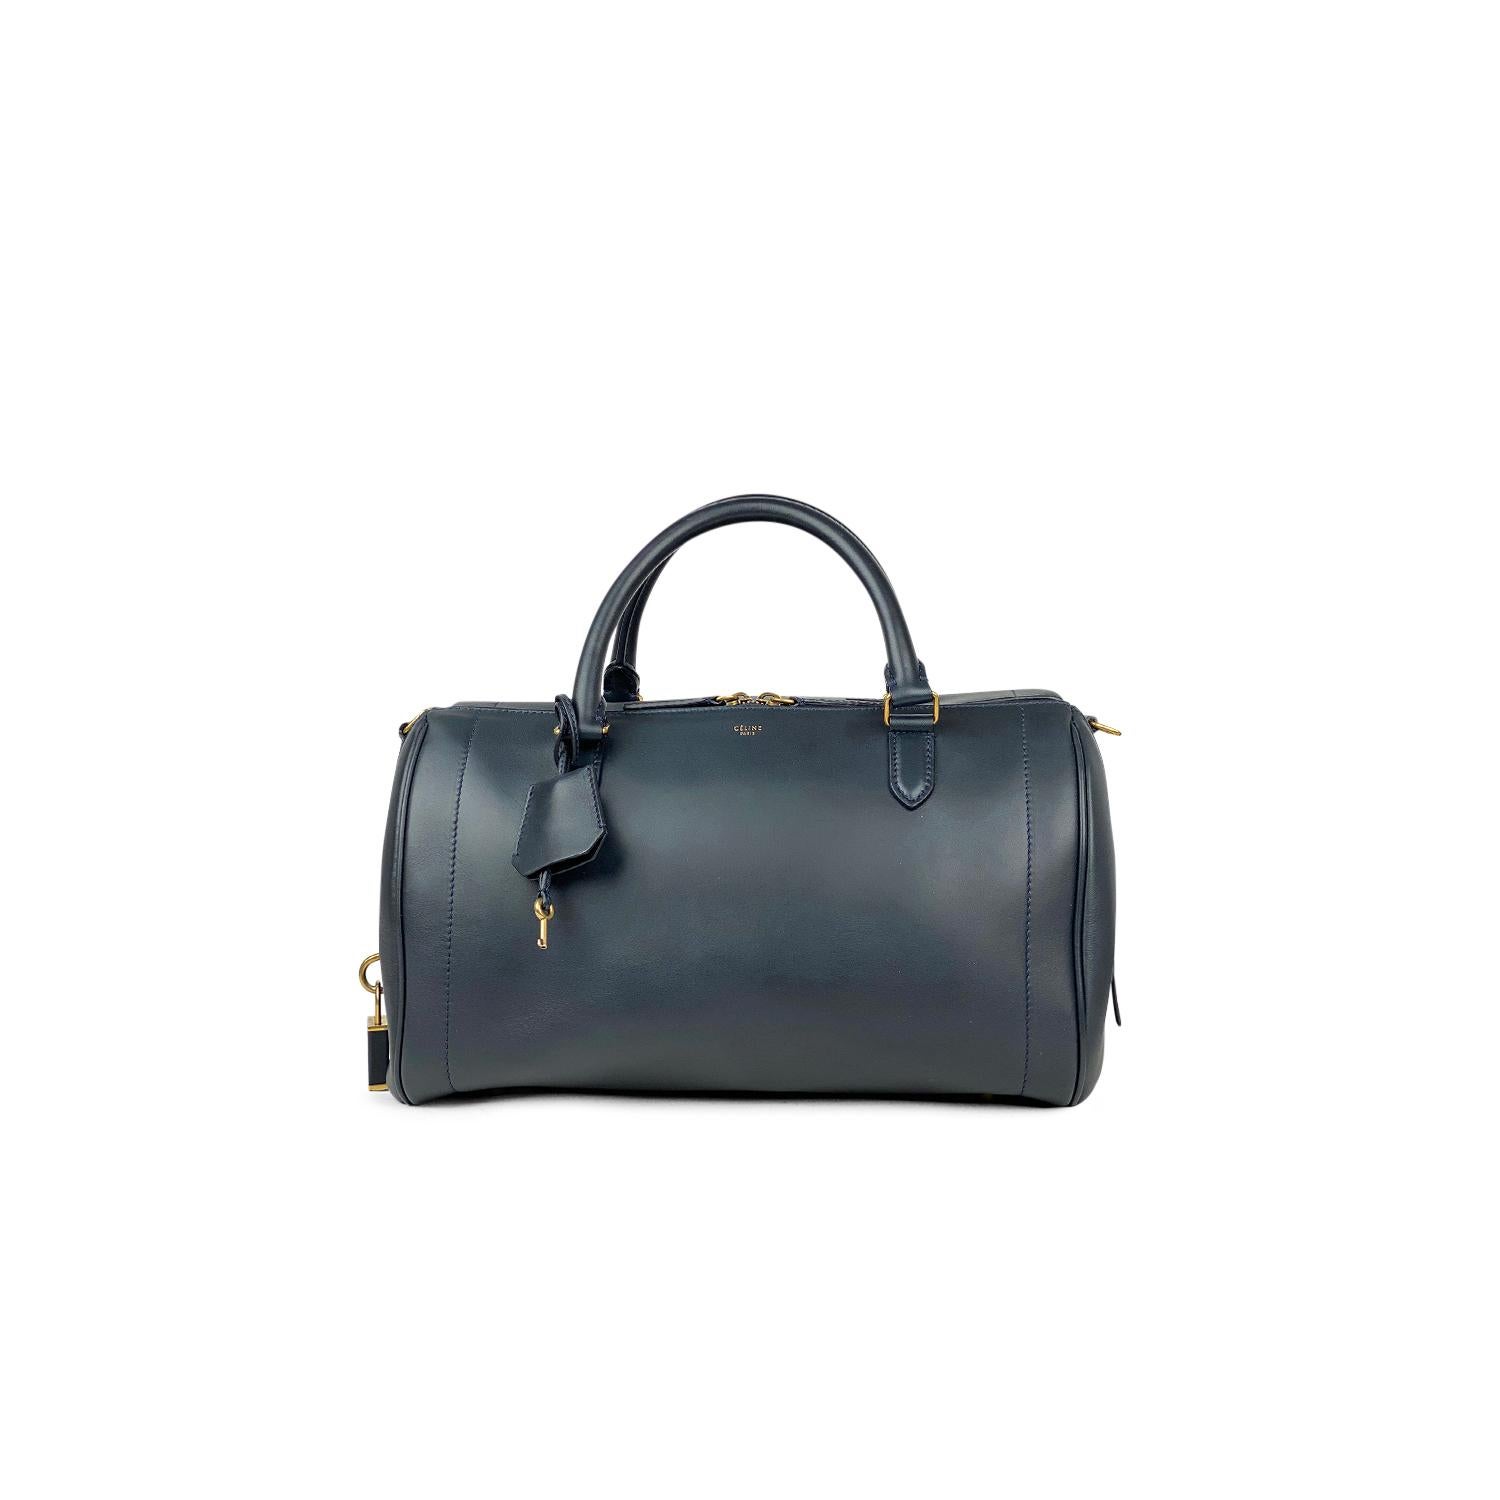 Celine Asymmetrical Duffle Bag In Good Condition For Sale In Sundbyberg, SE